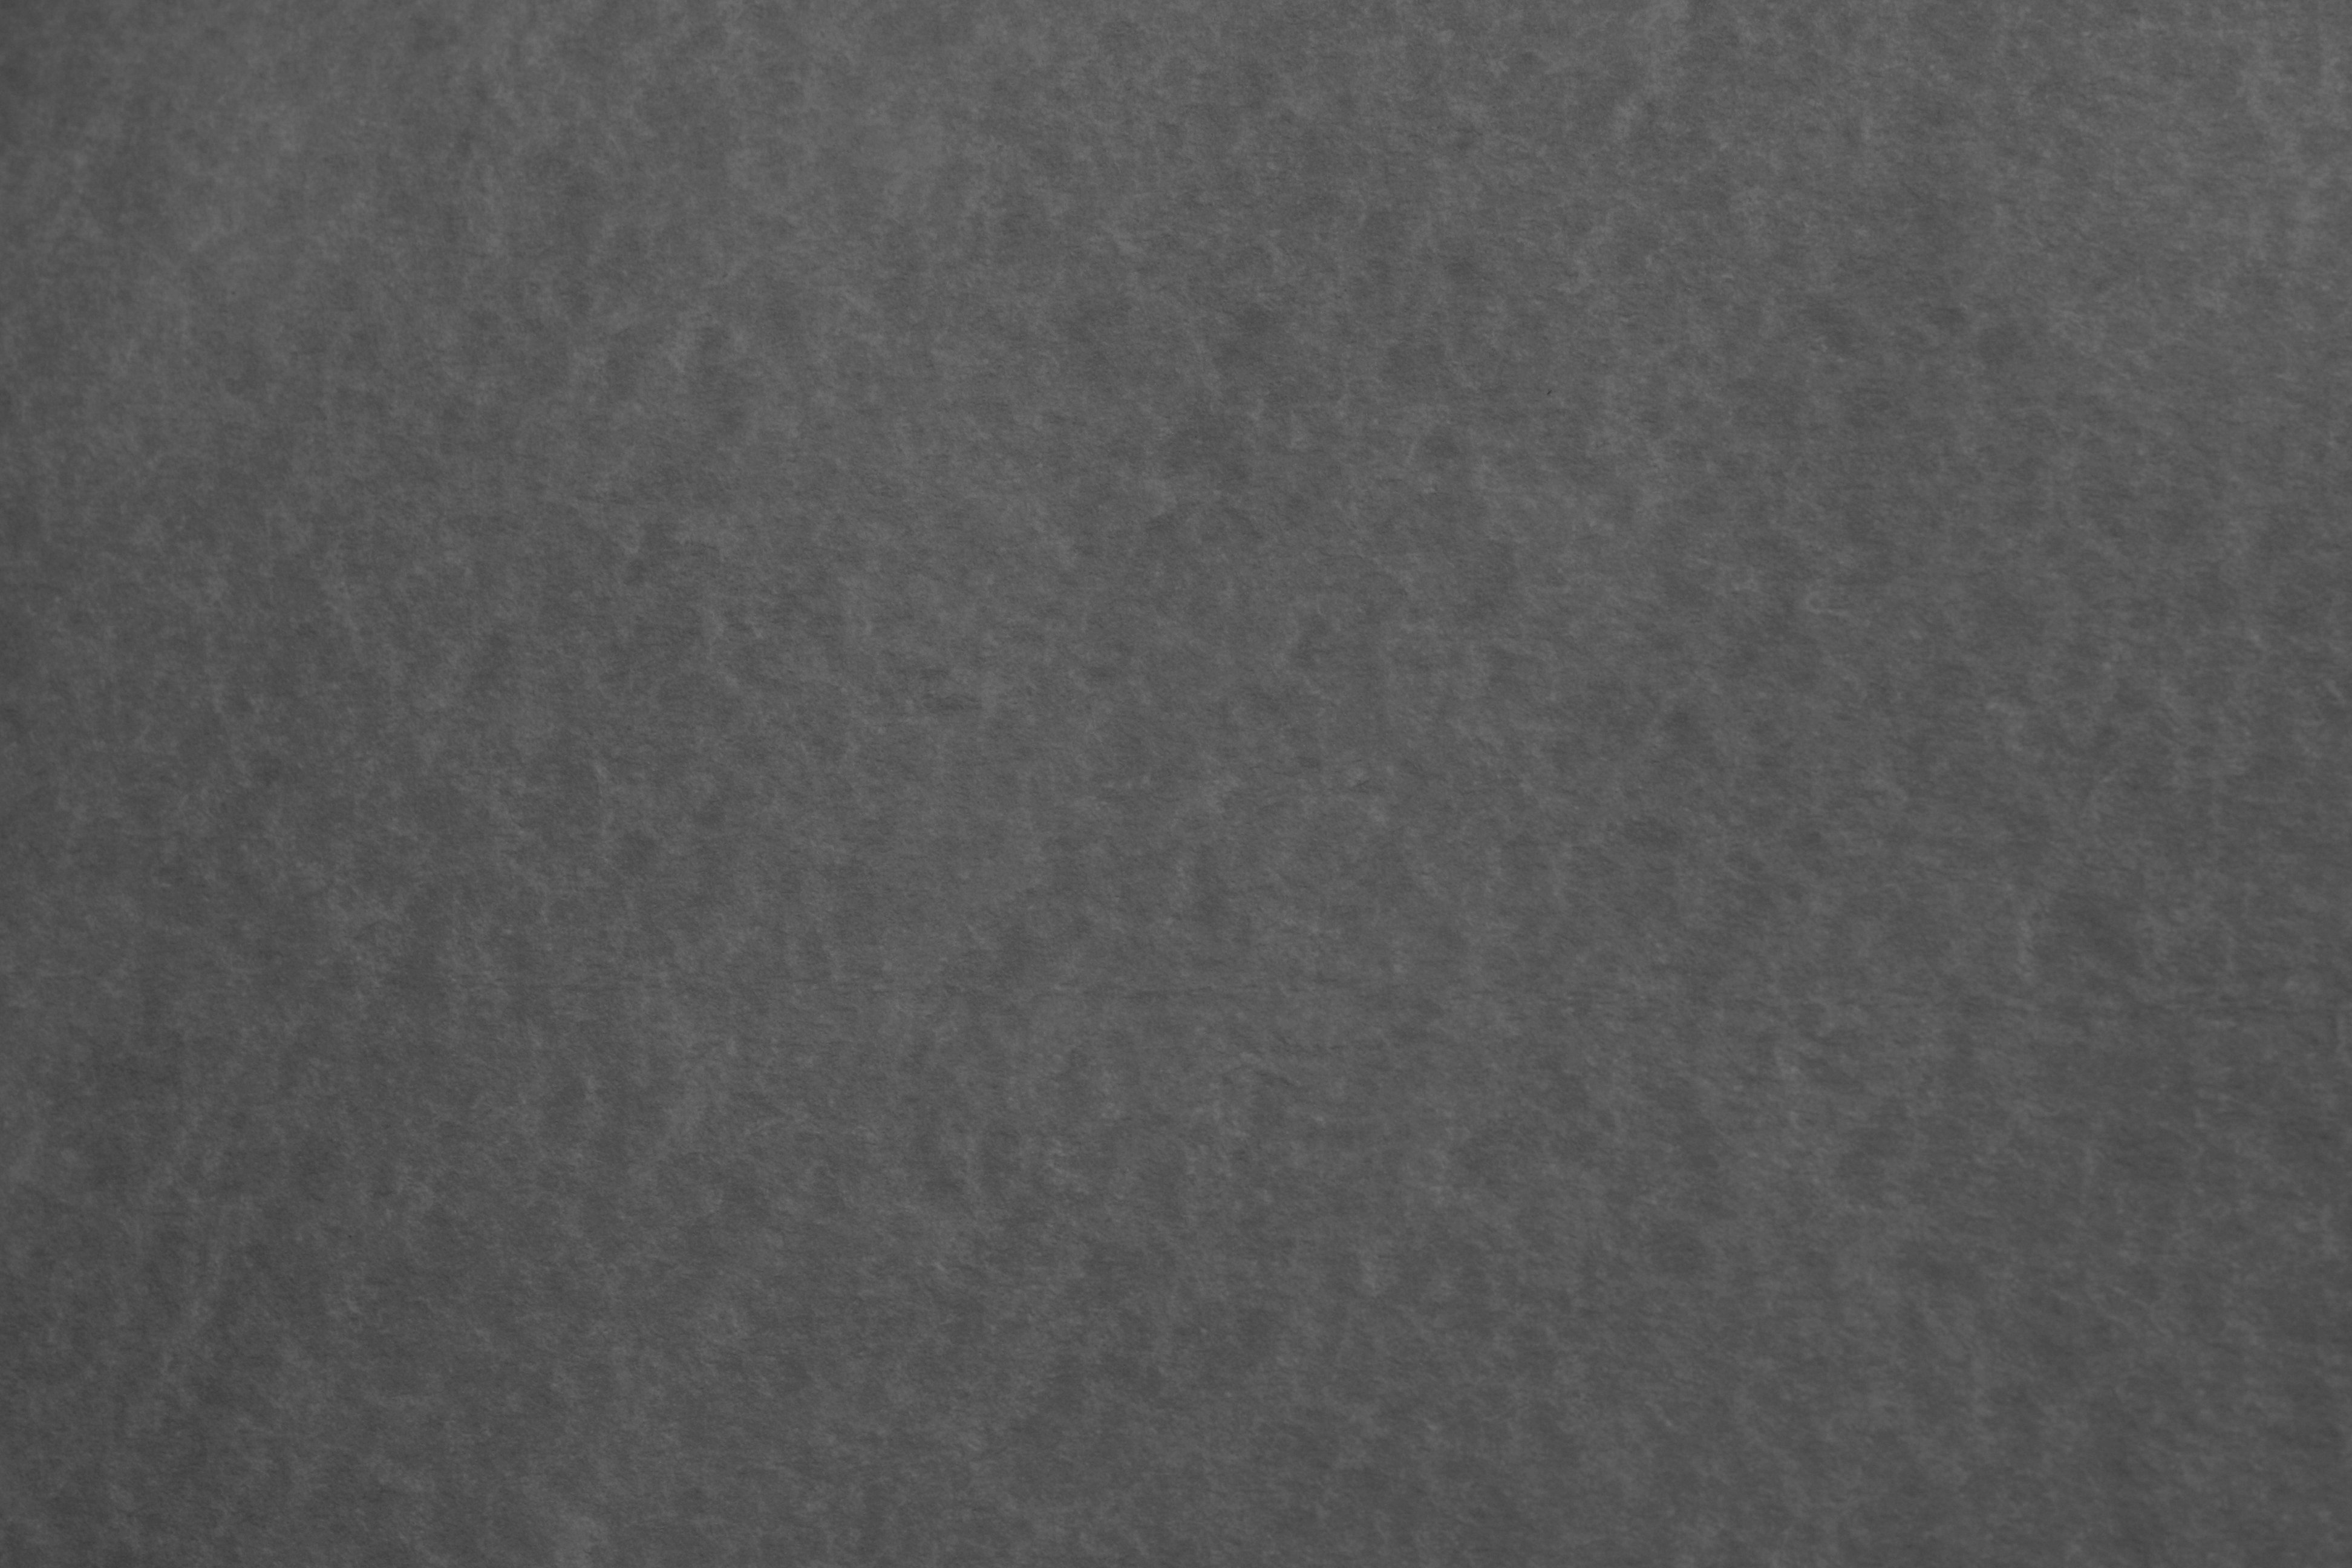 Charcoal Gray Parchment Paper Texture Picture | Free Photograph ...